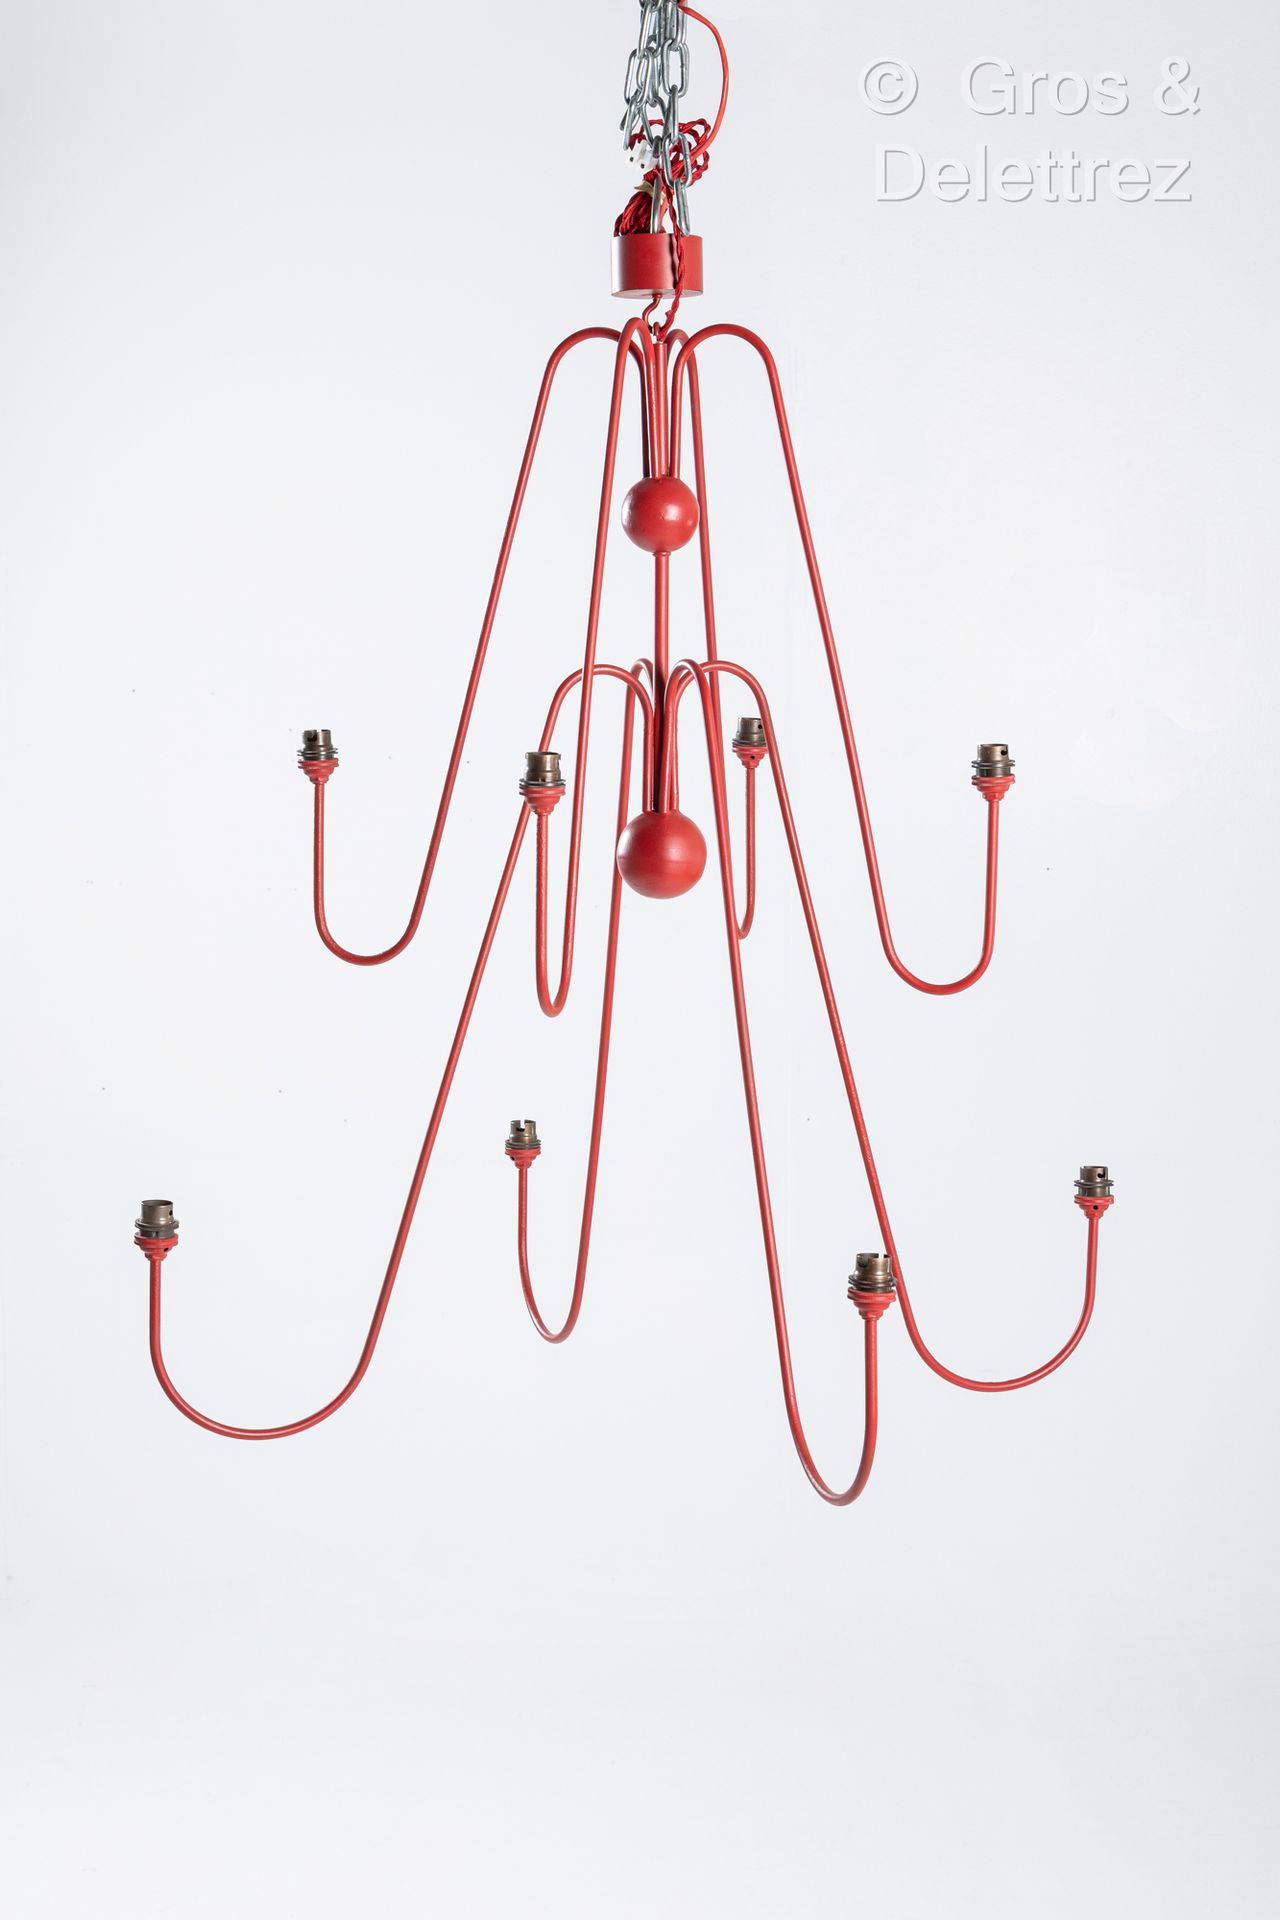 Null 让-罗耶尔(1902-1981)
花束 "吊灯，有八个红色漆面金属臂。
大约在1950年。
高：94厘米/直径：80厘米
(修复后的漆面)

参考资料&hellip;